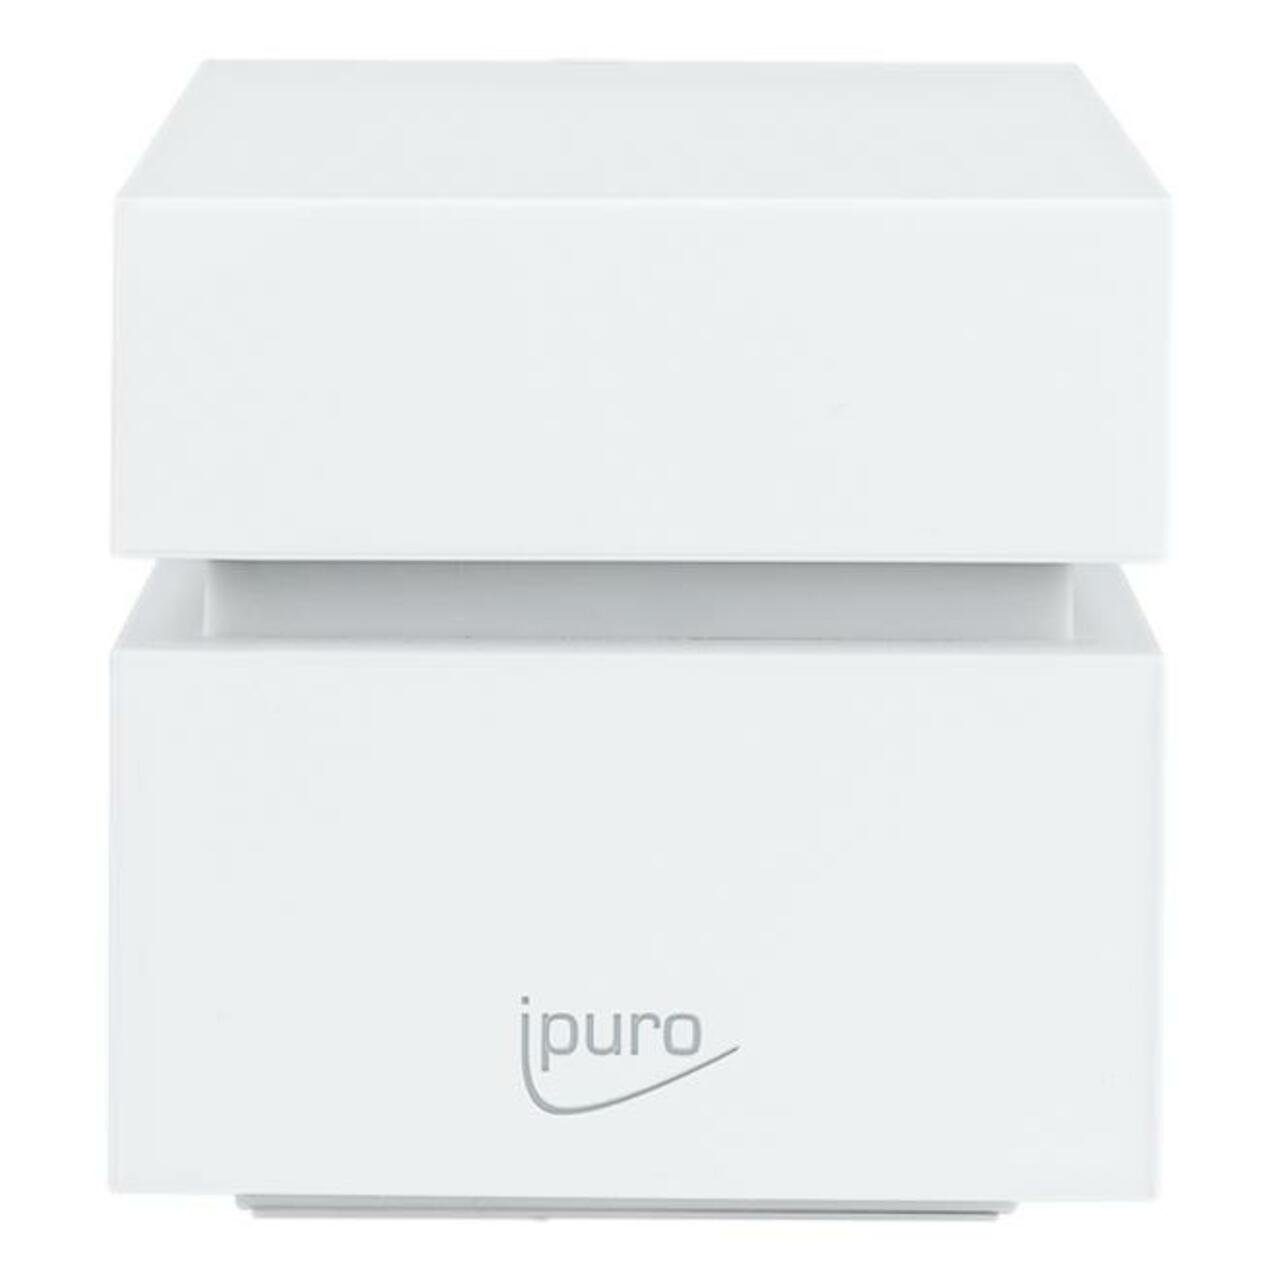 IPURO Diffuser Air Pearls Ellectric Diffuser Big Cube